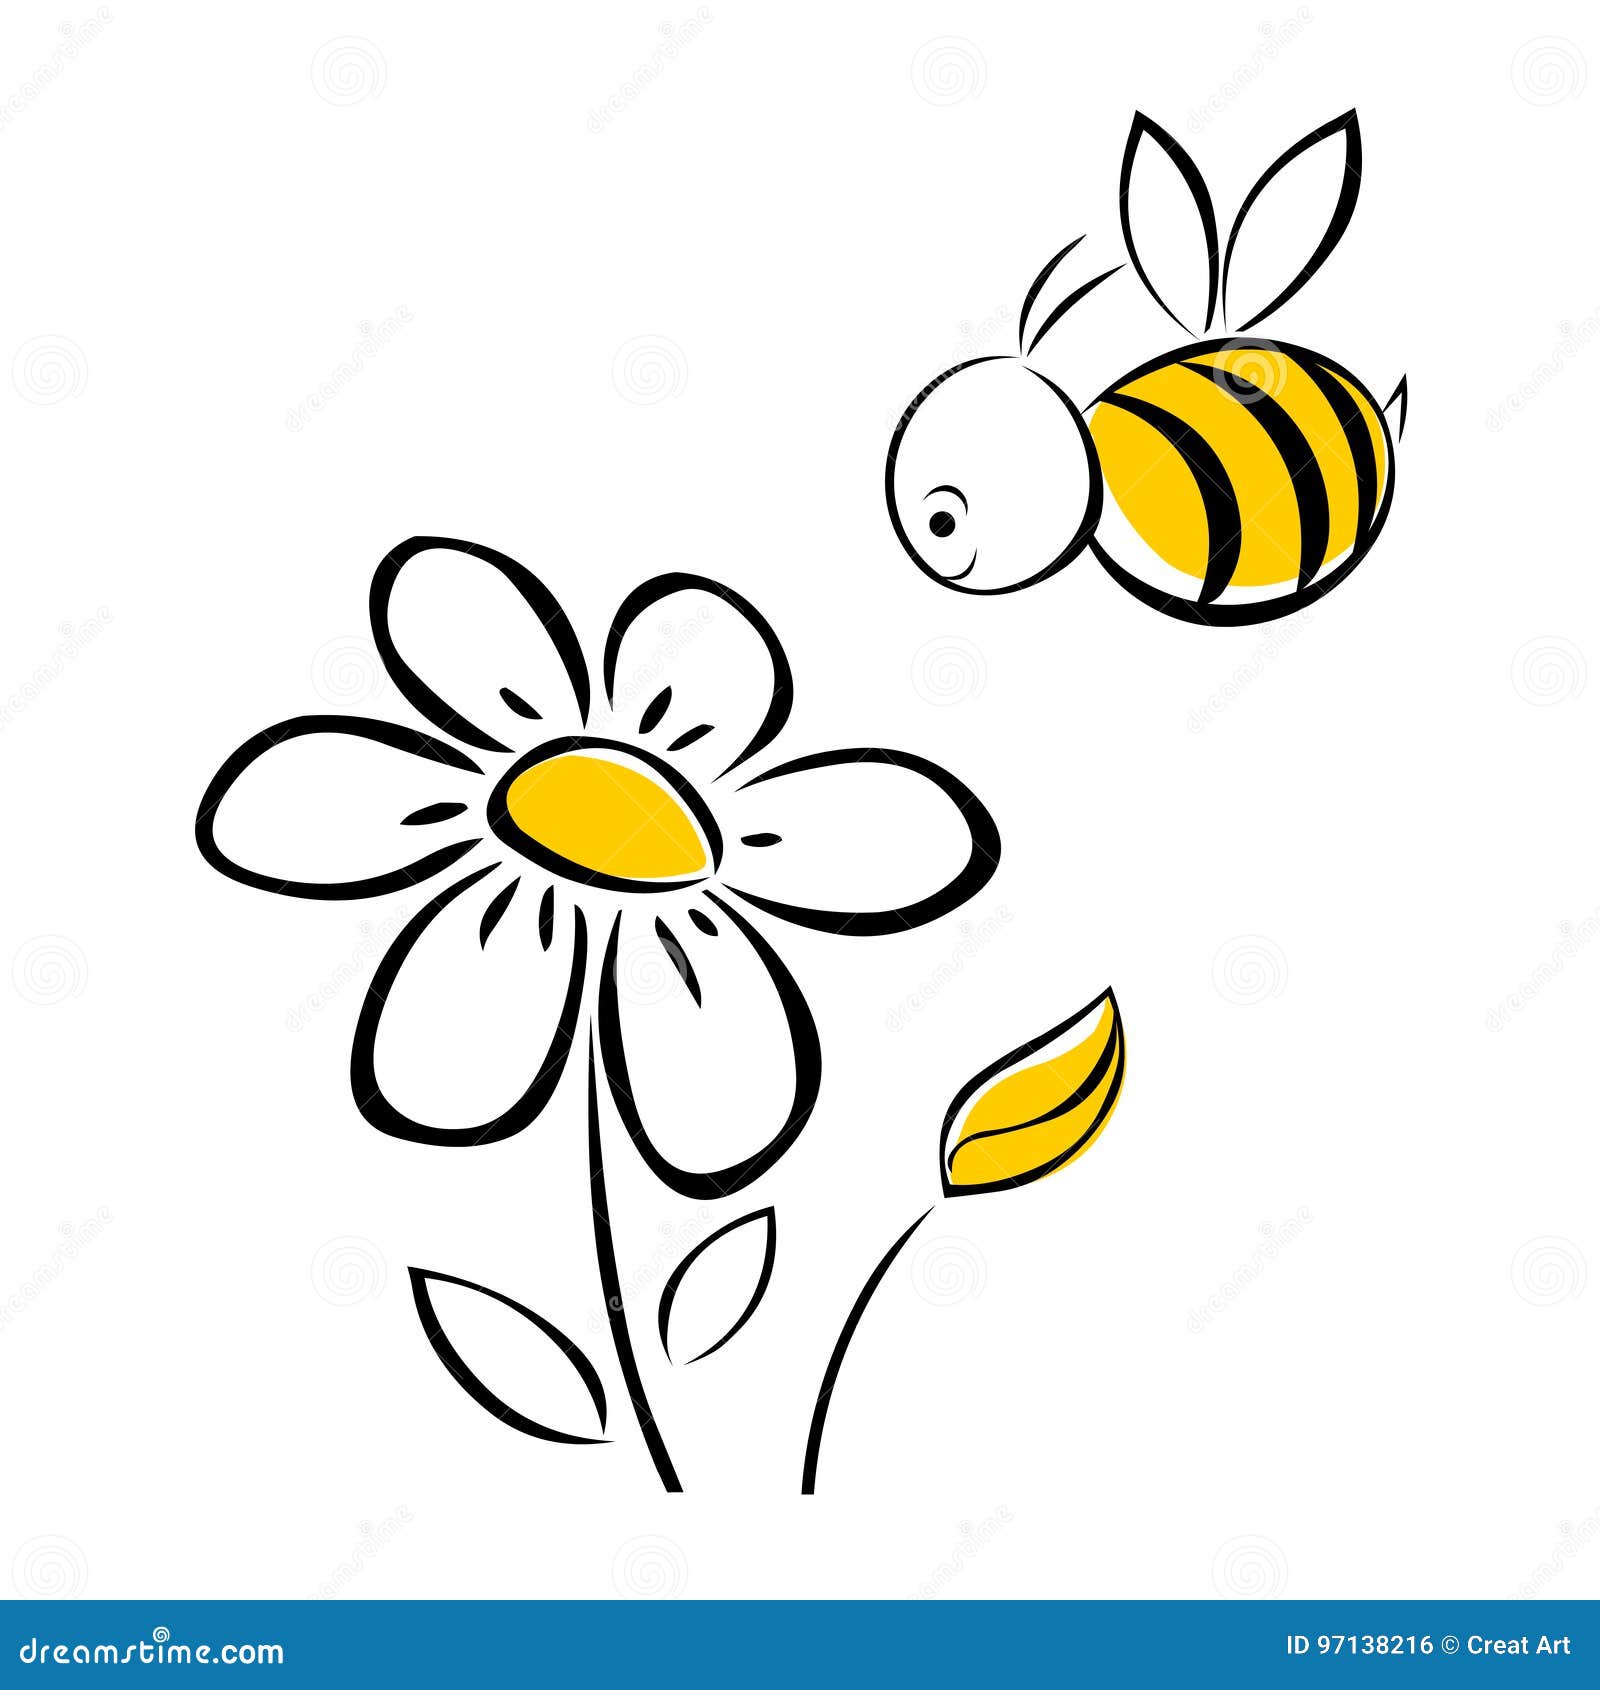 Honey Bee On Flower Drawing Images  Free Download on Freepik